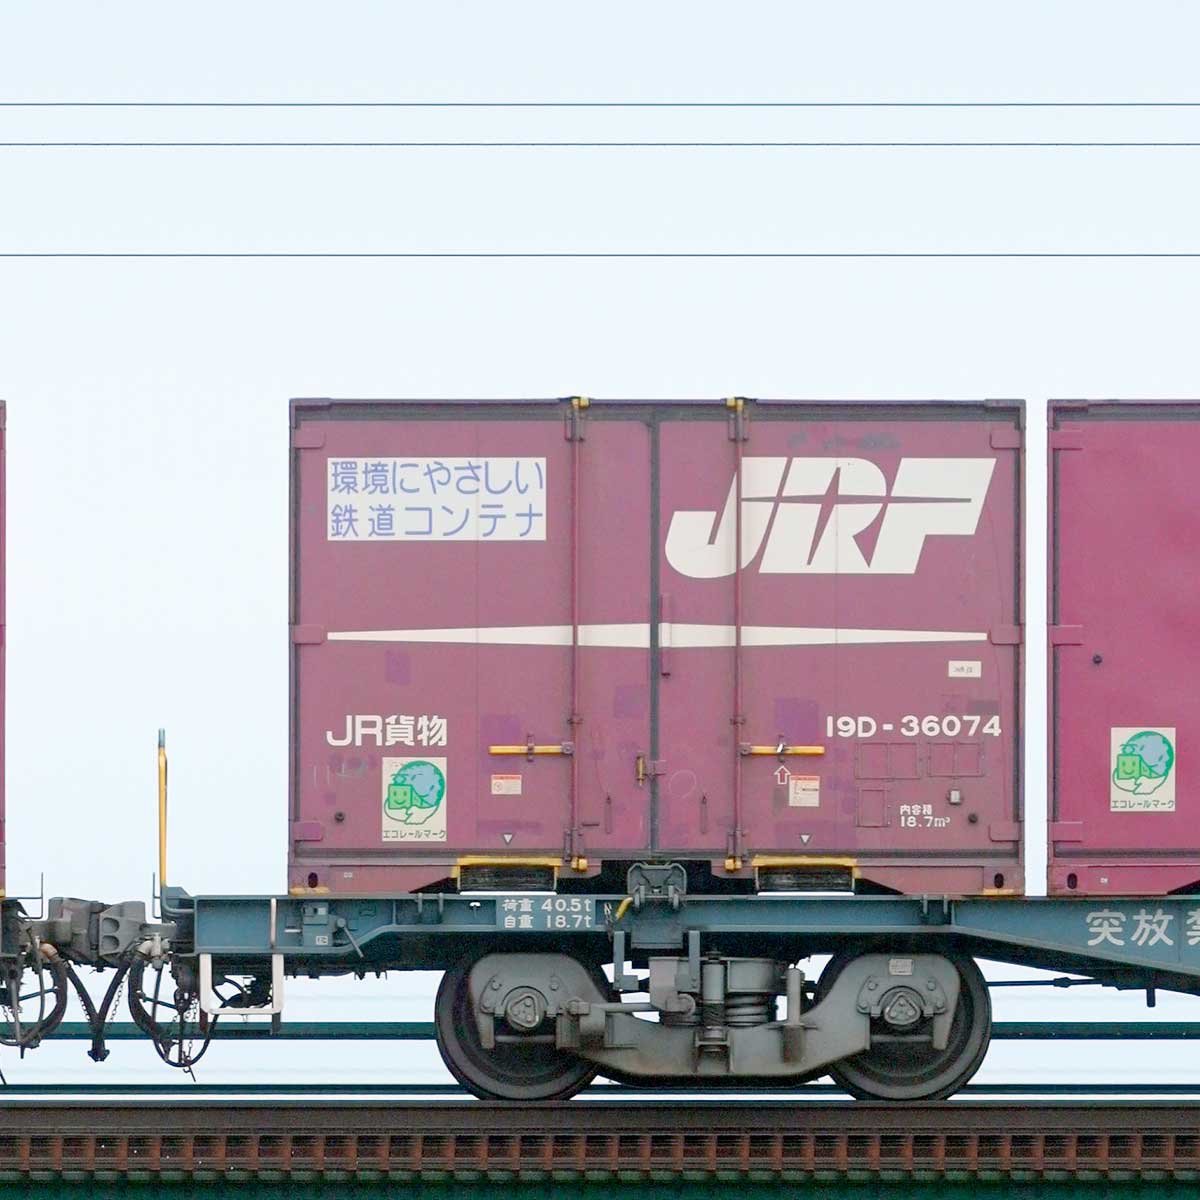 Jr貨物コキ100系 Railfile Jp 鉄道車両サイドビューの図鑑